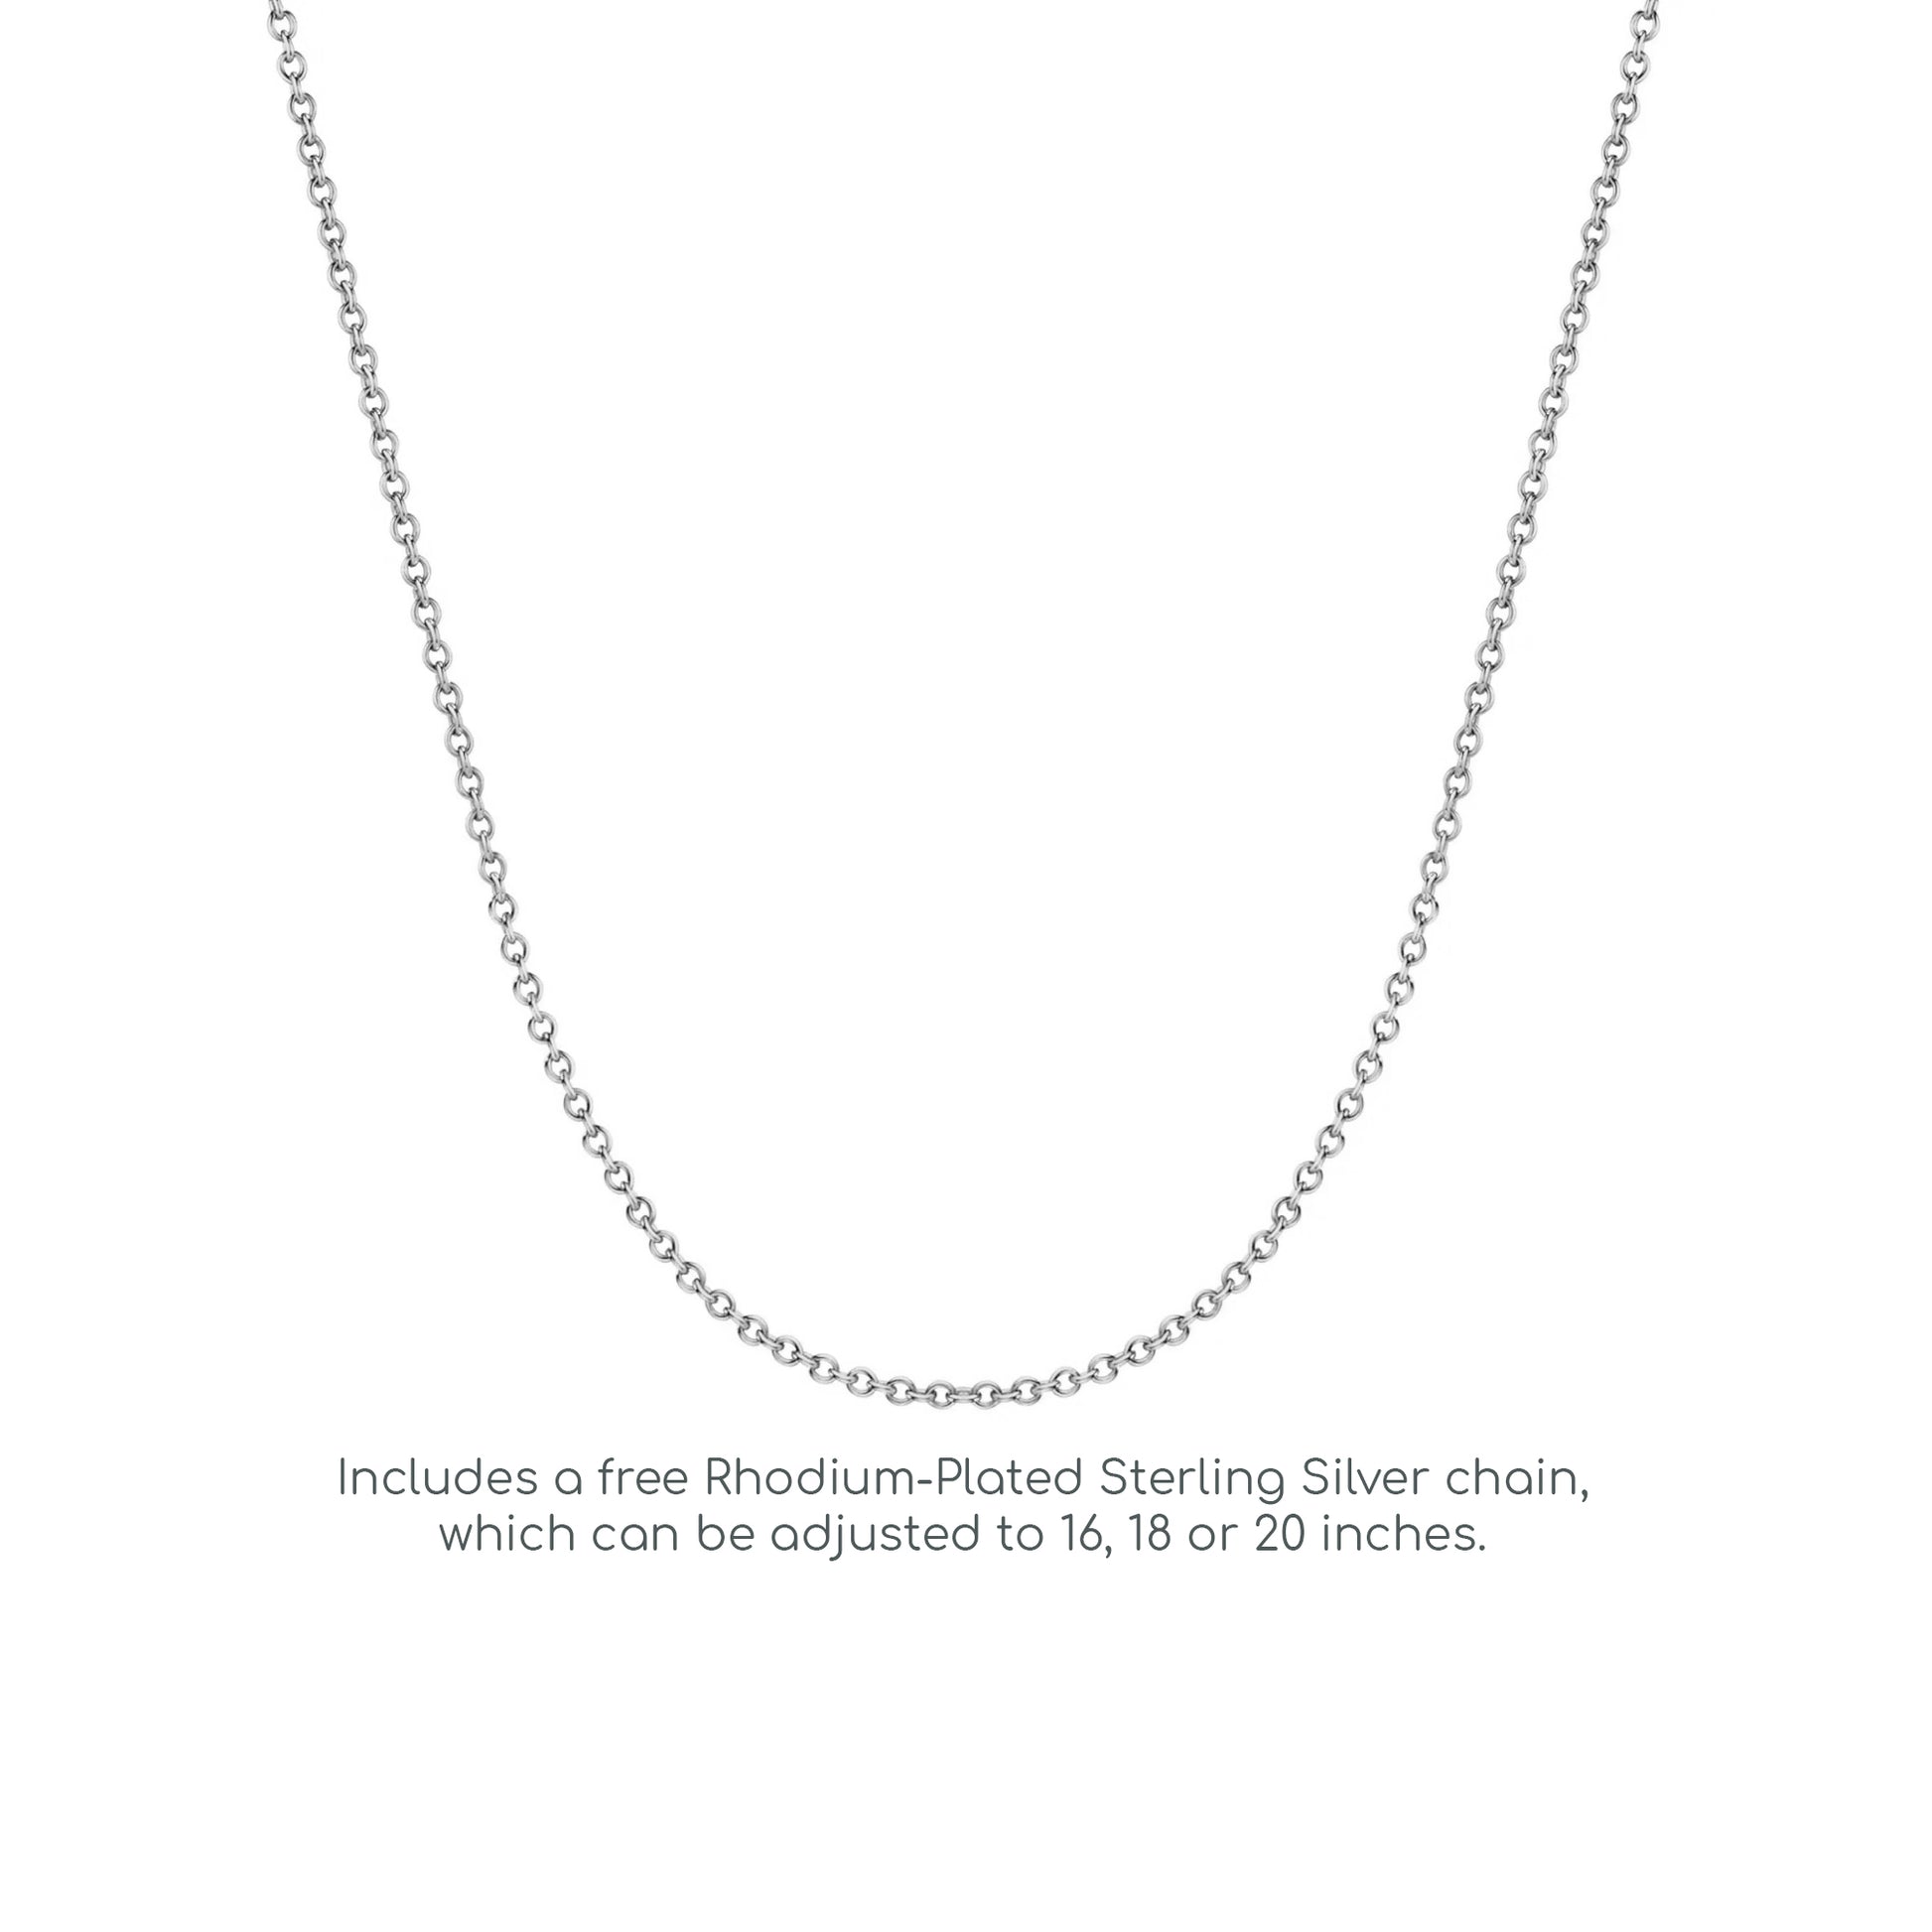 Silver  CZ Dainty Cross Pendant Necklace 18 inch - SZP019